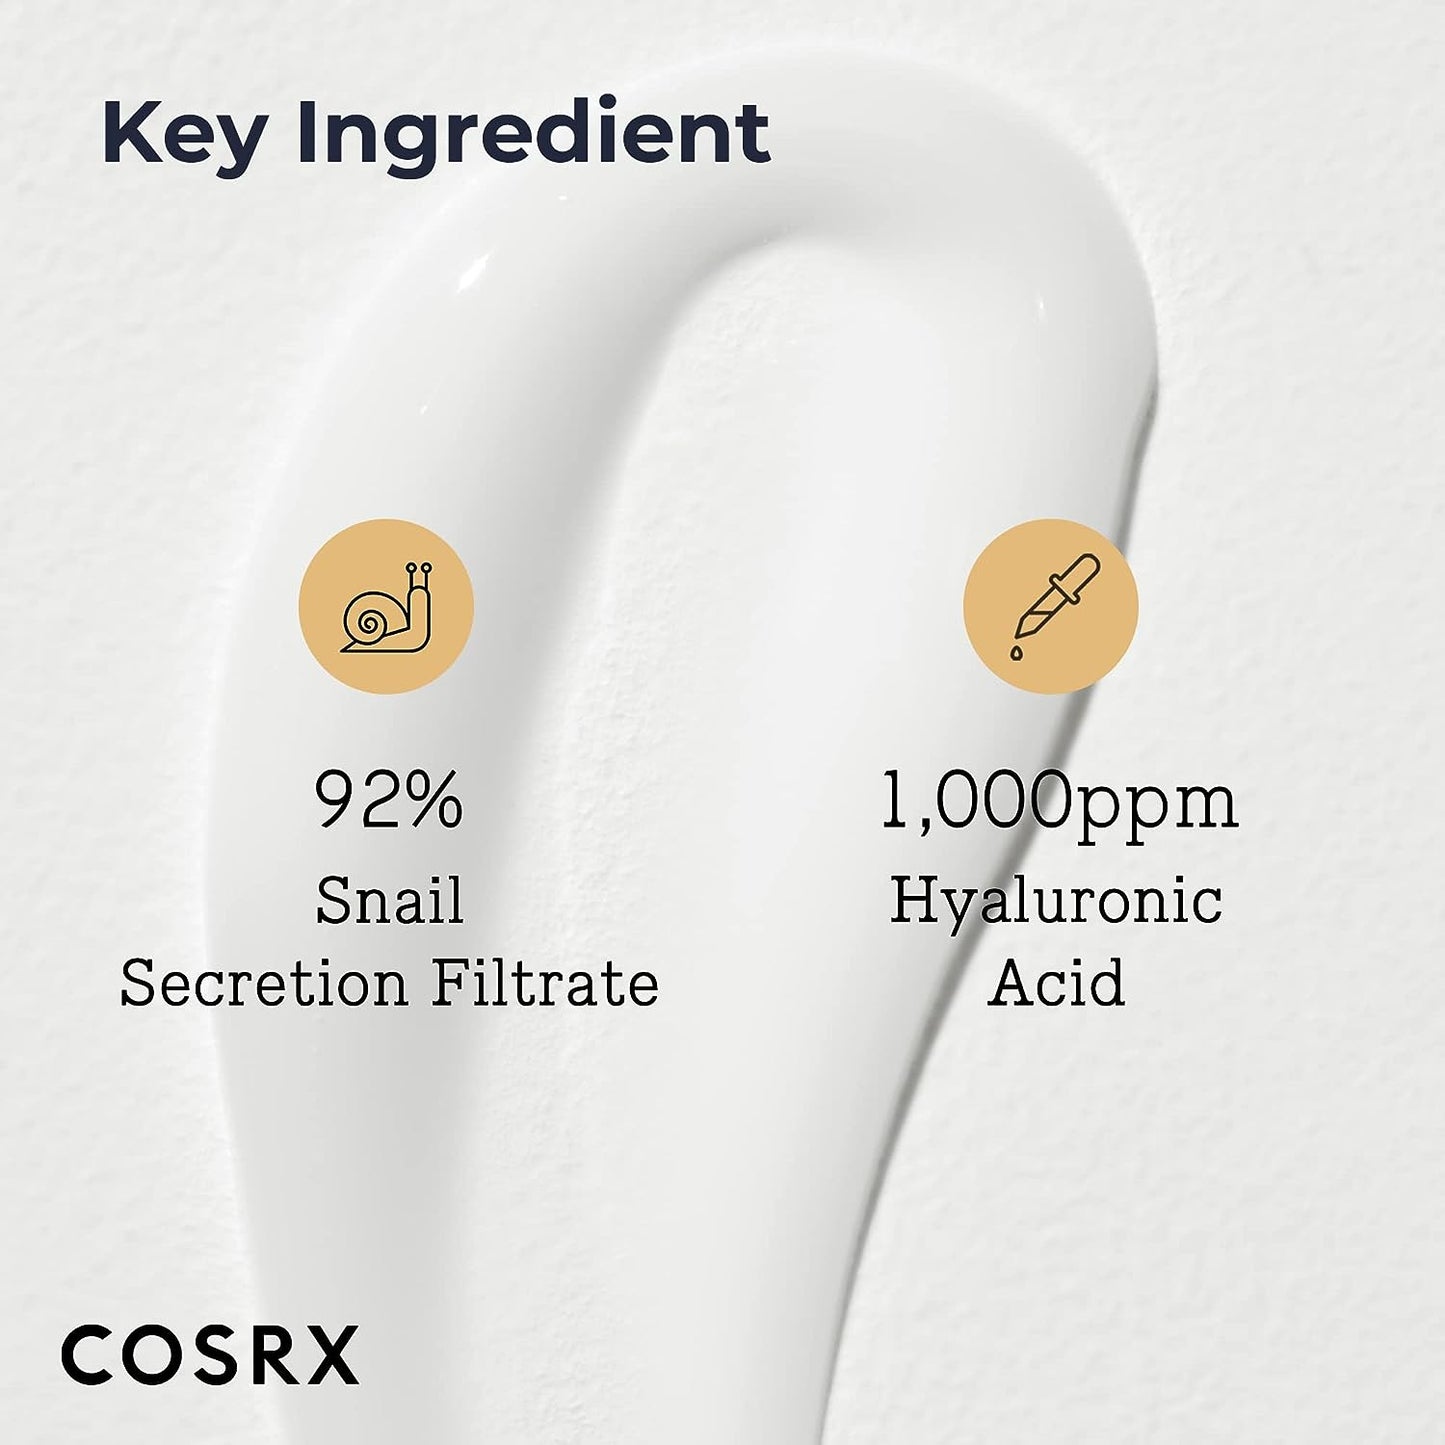 COSRX - Advanced Snail 92 All In One Cream